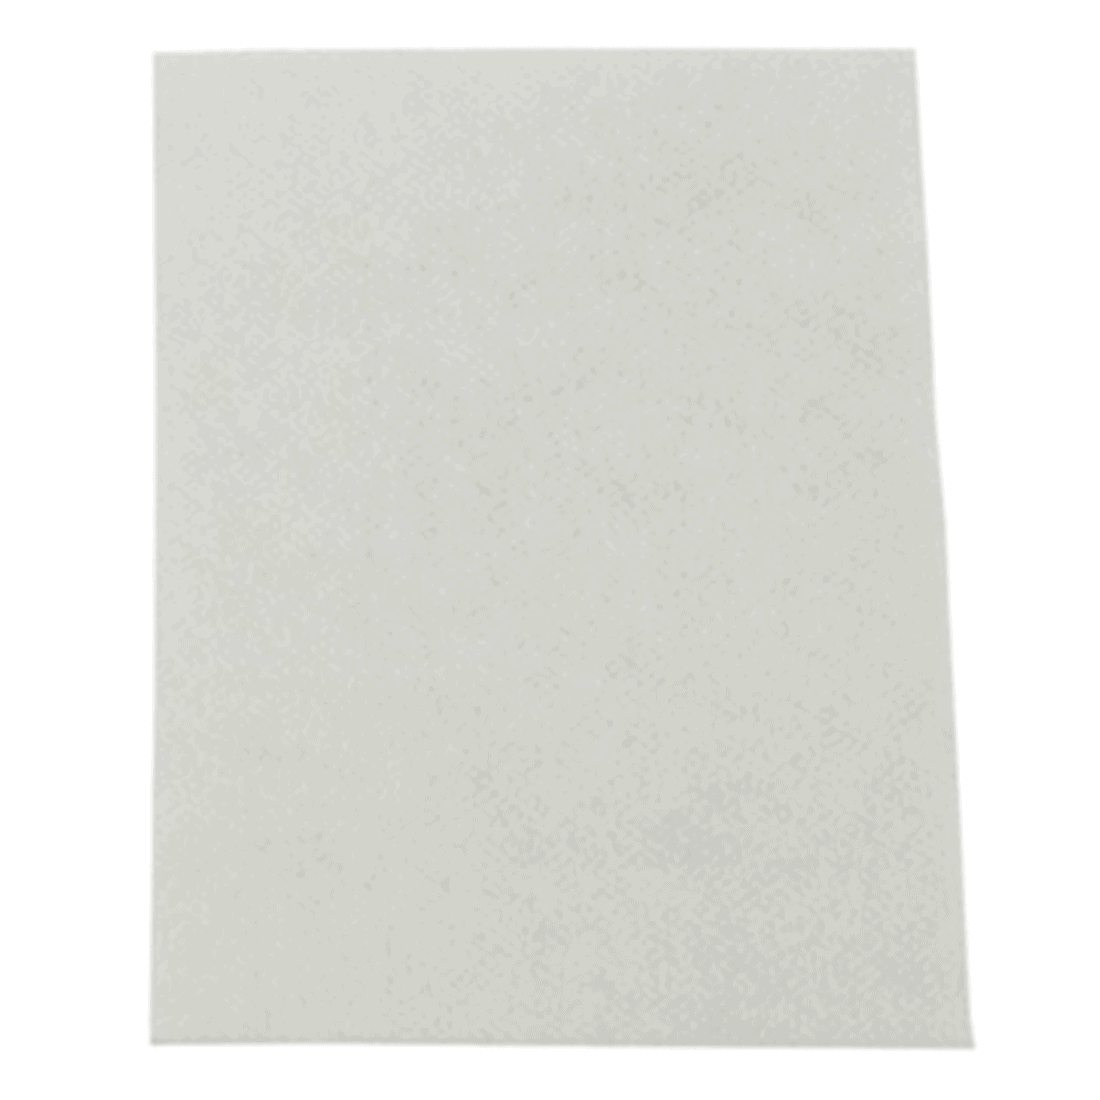 Non-adhesive sterile pad (76 mm x 102 mm)